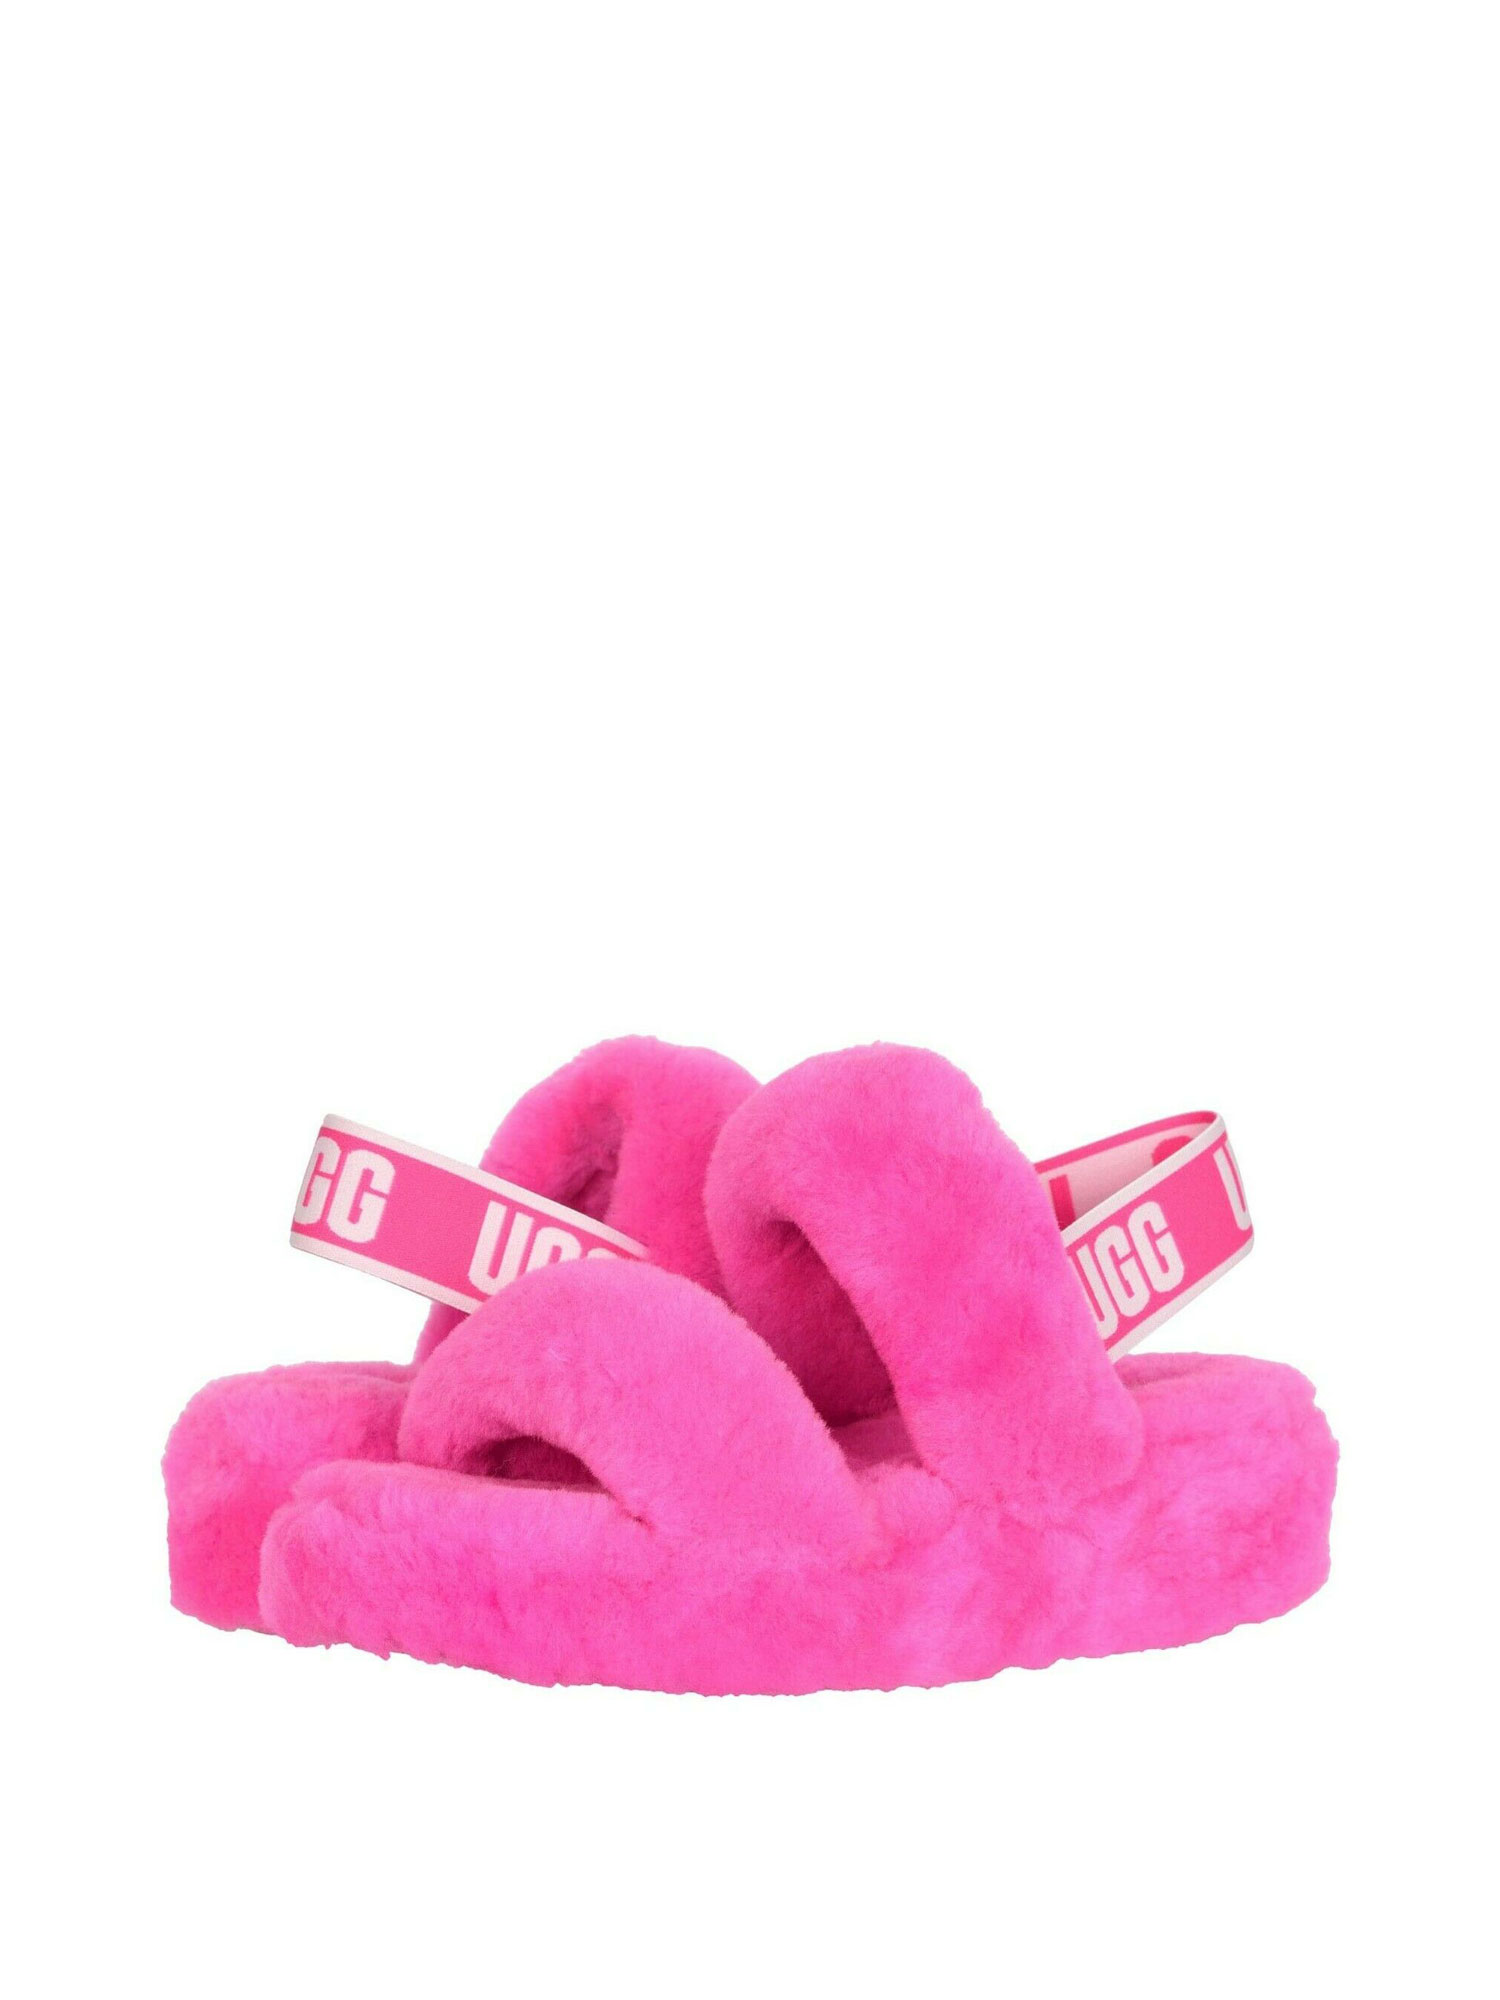 UGG Oh Yeah Slide Women's Sheepskin Slipper Sandals 1107953 - image 1 of 5